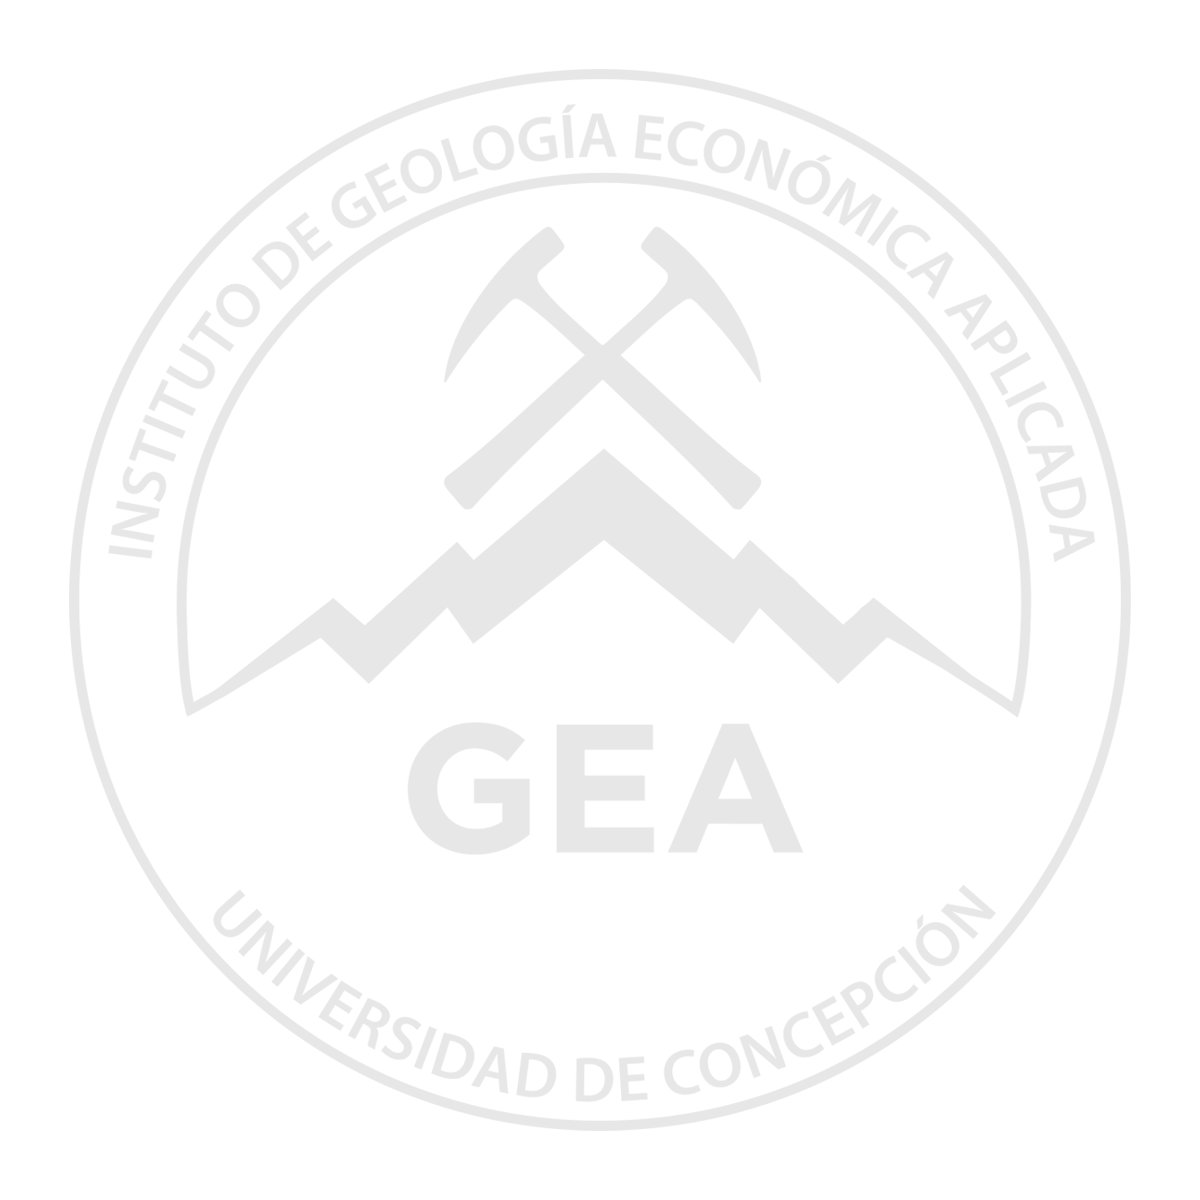 https://www.institutogea.cl/wp-content/uploads/2022/08/featured-instituto-gea-objetivos.png